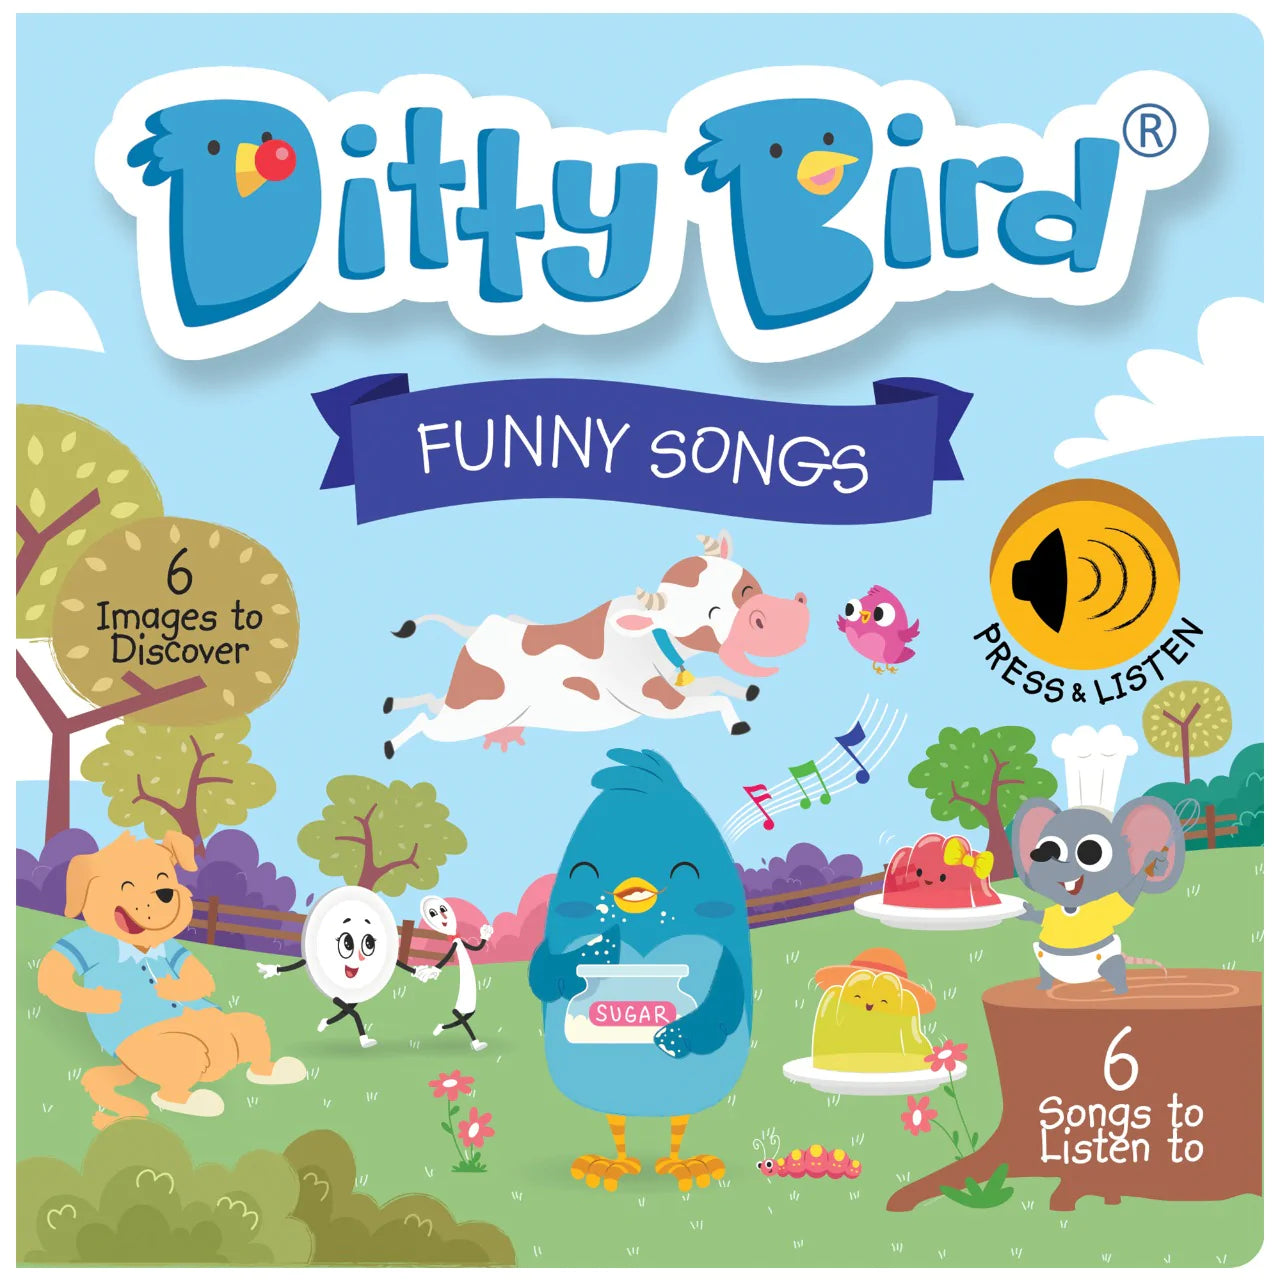 Ditty Bird- Funny Songs